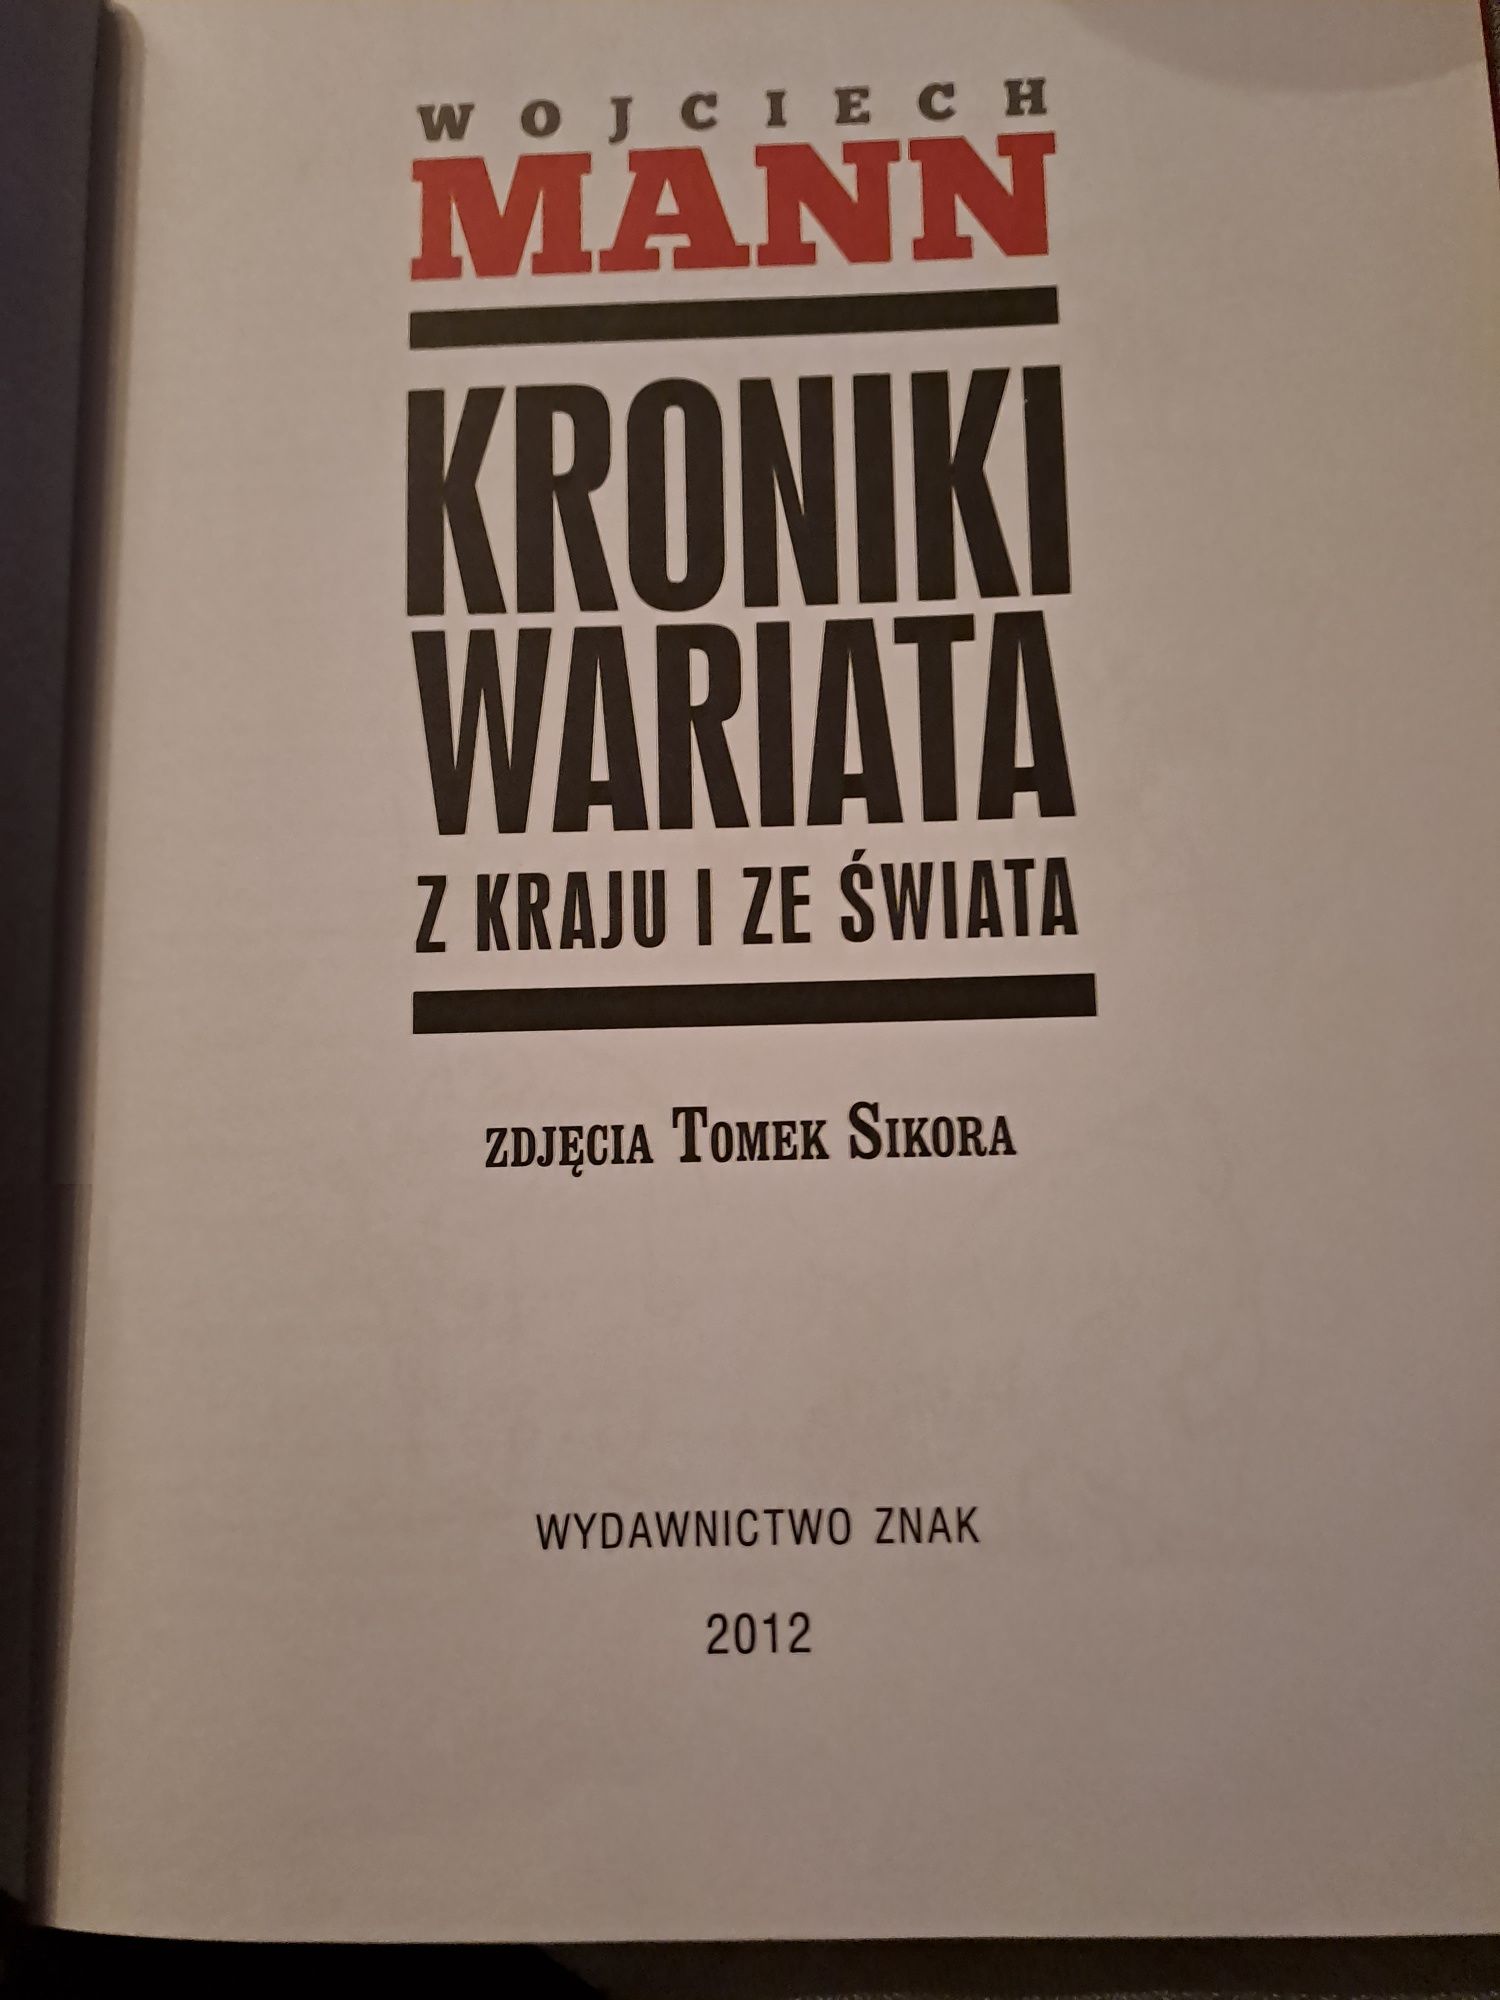 Wojciech Mann  "Kroniki wariata"